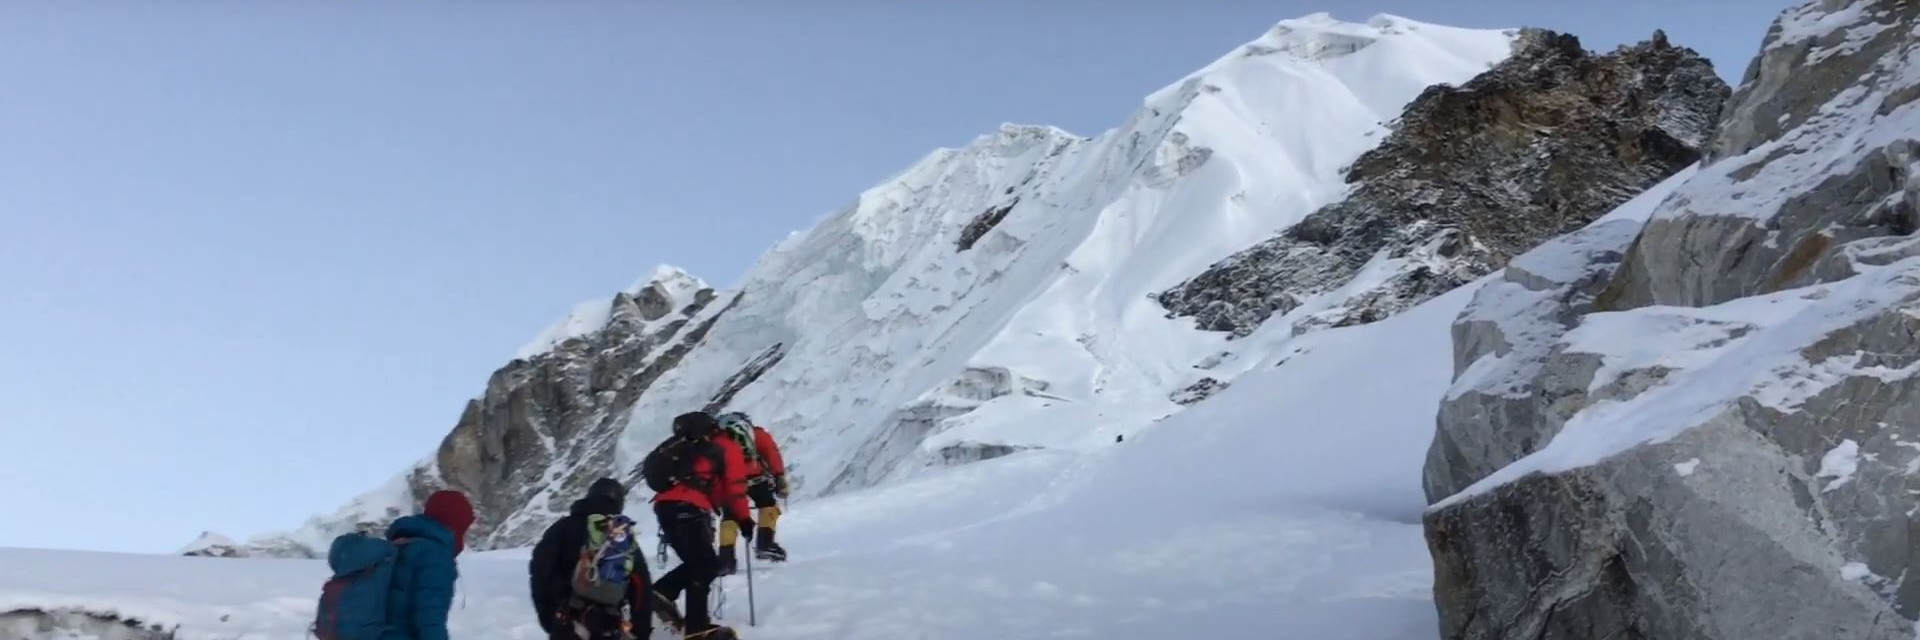 Lobuche West Peak Climbing (6145 m) - 18 Days Itinerary, Cost, Map, Best Season